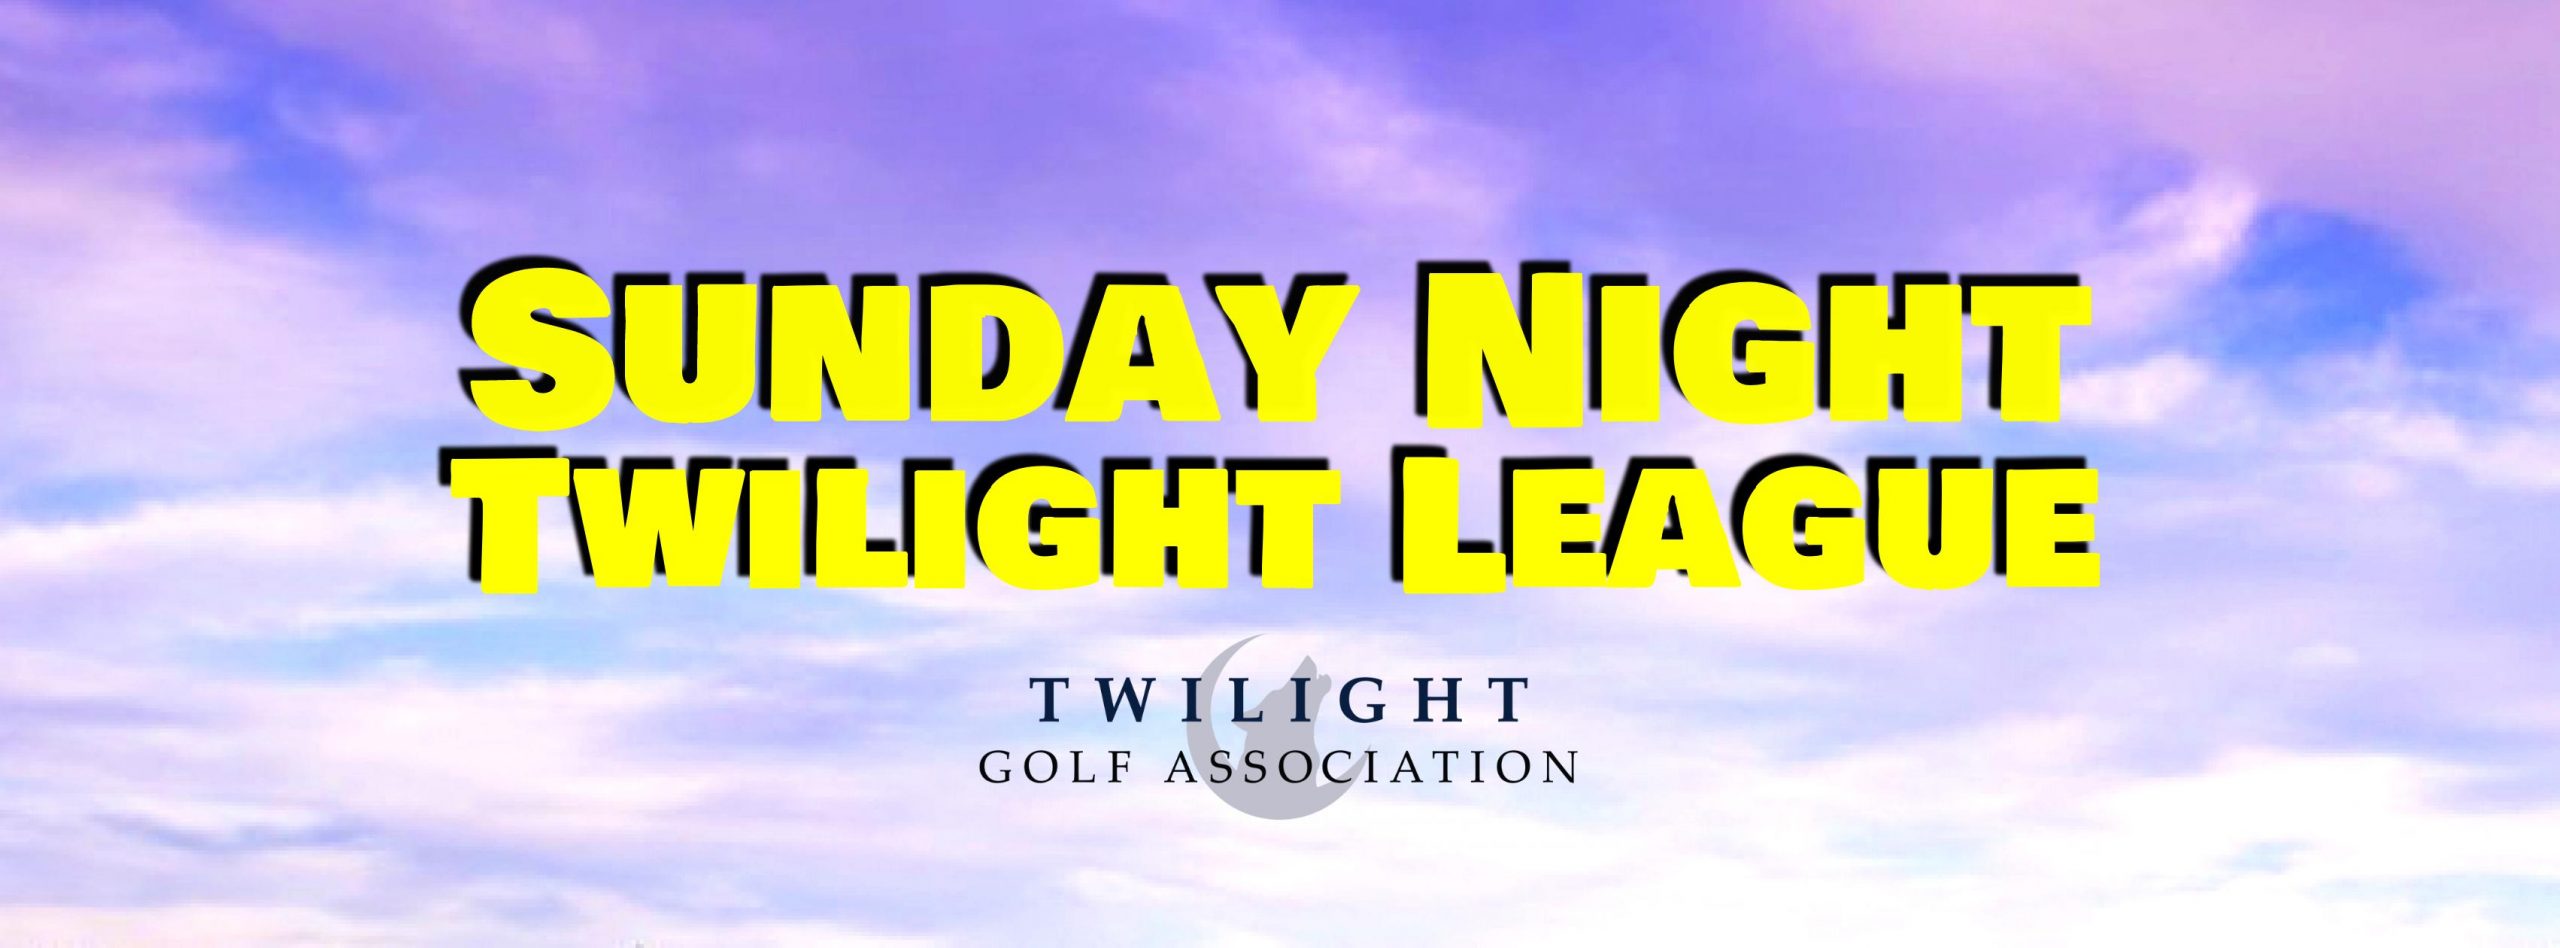 Sunday Night Twilight League at San Marcos Golf Course